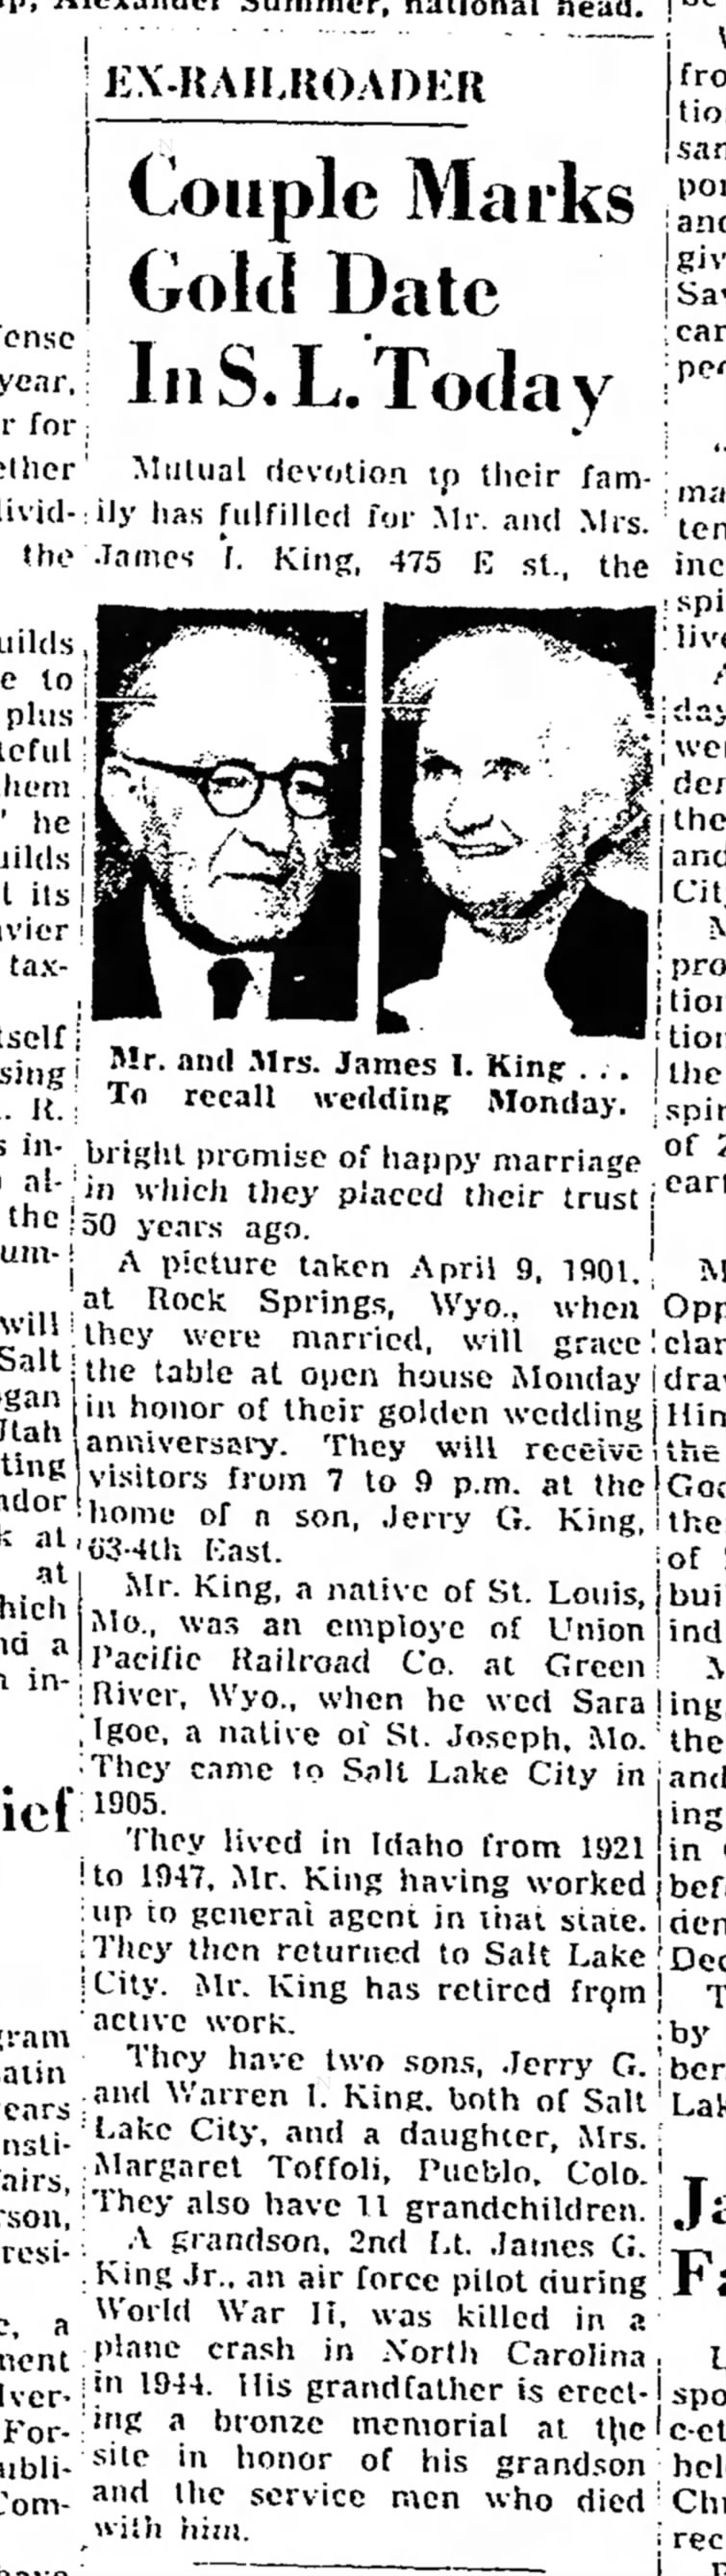 April 9, 1951